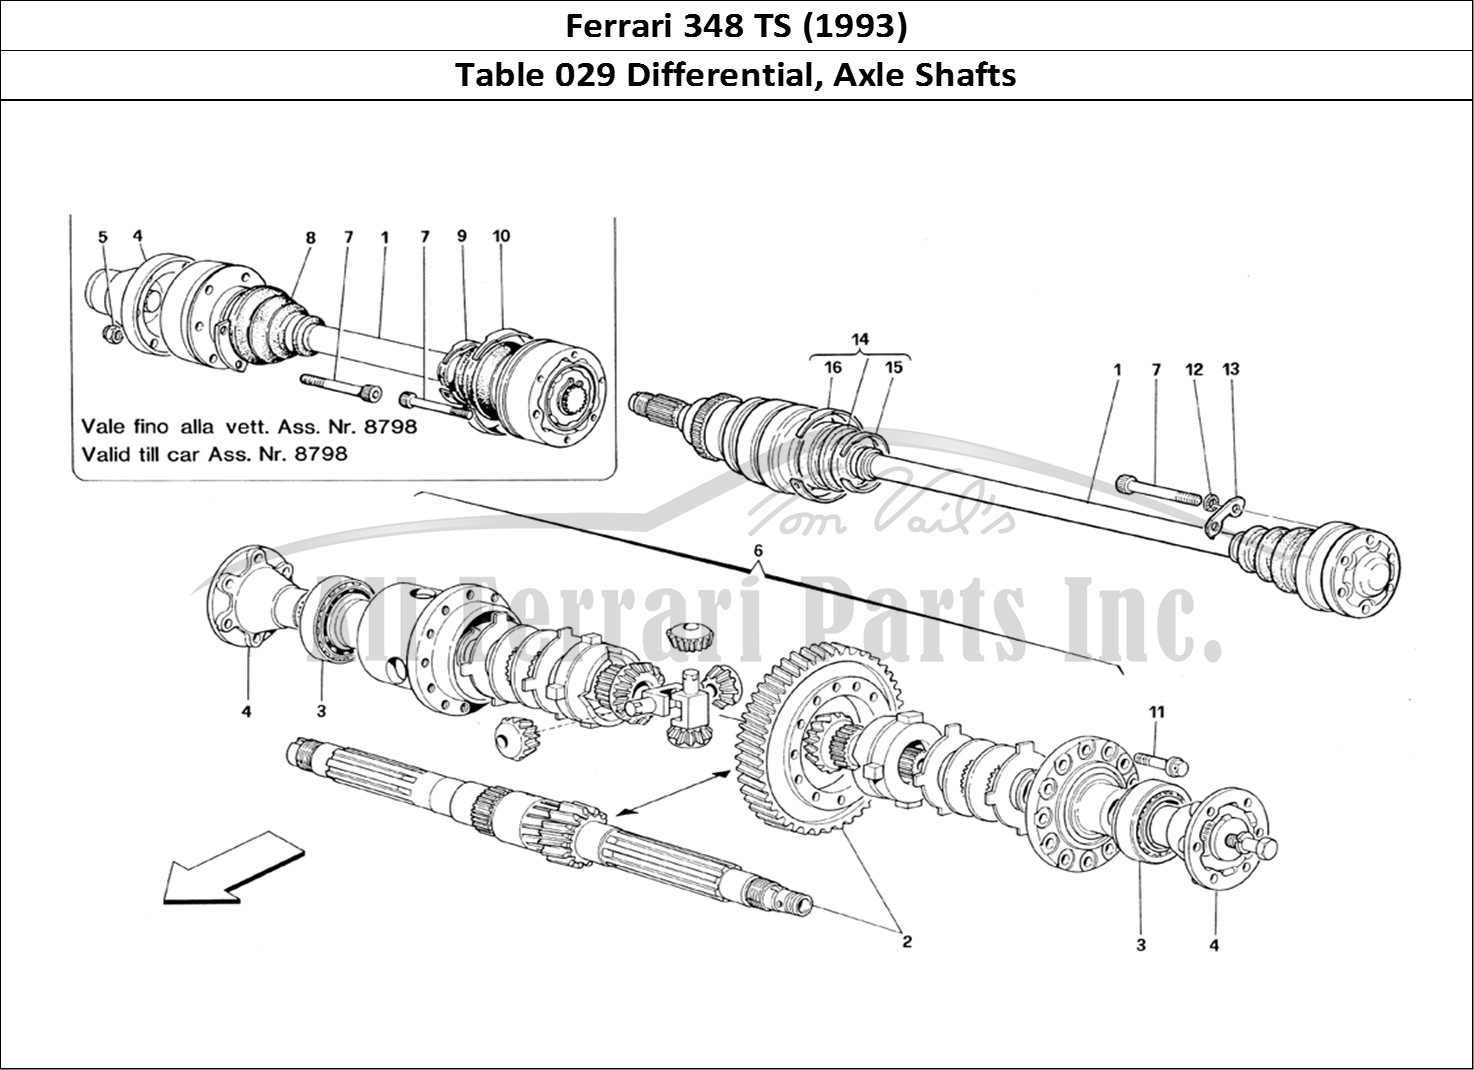 Ferrari Parts Ferrari 348 TB (1993) Page 029 Differential & Axle Shaft